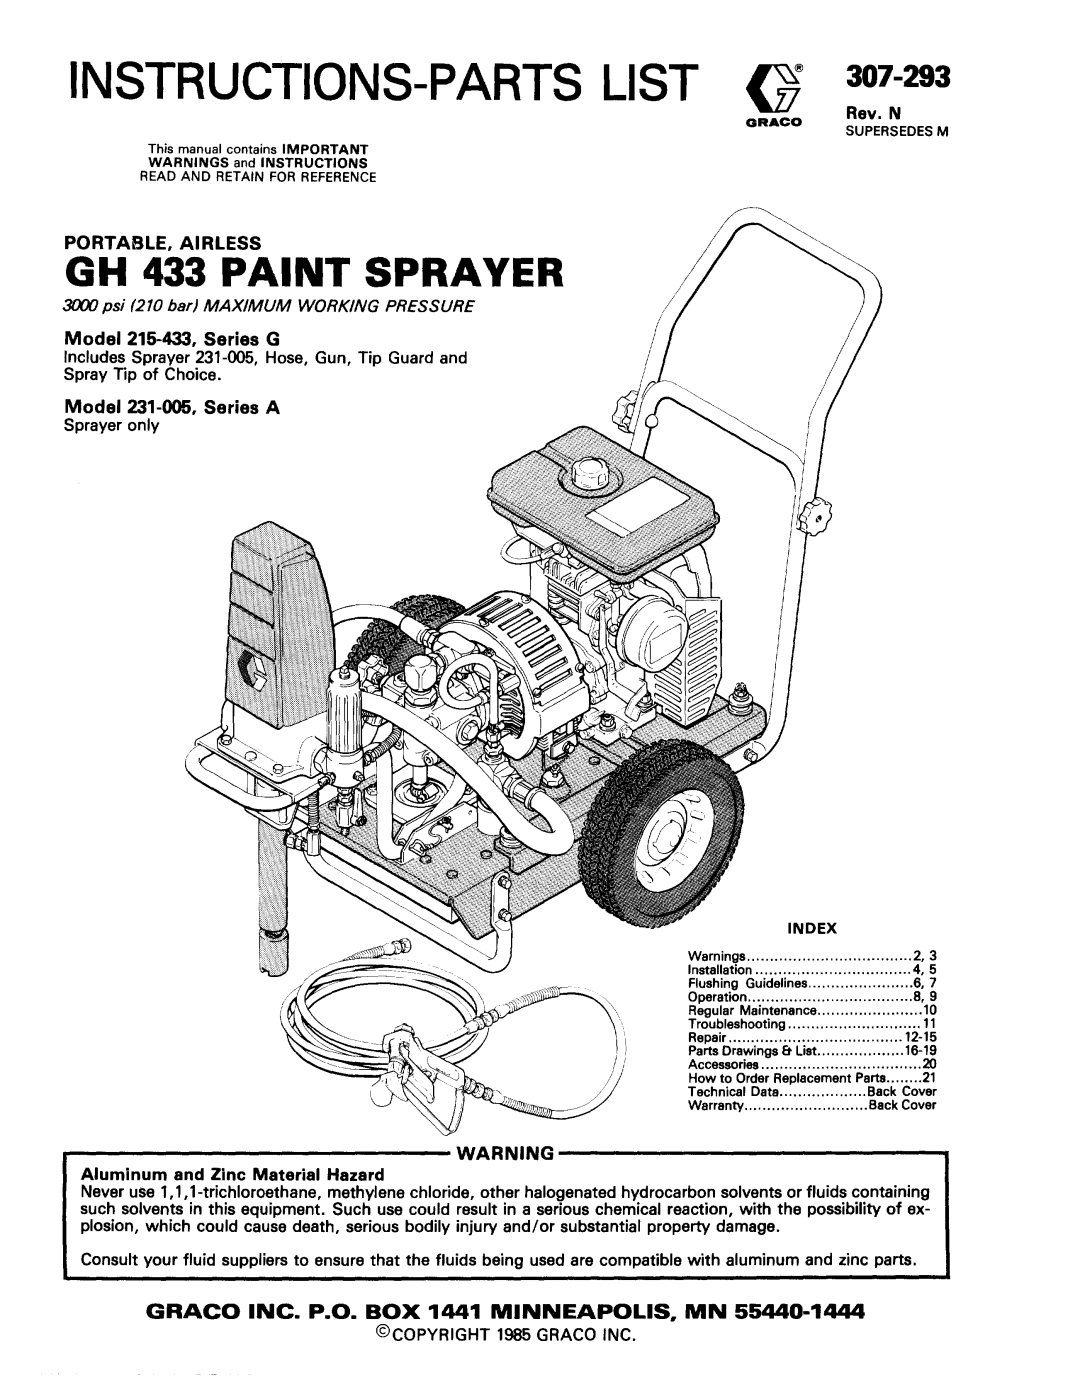 Graco 241123 manual Instructions-Partslist, 308924, Rev. B, SpeedTurbine Conversion Kit, GTS-4900HVLP, Related Manual 